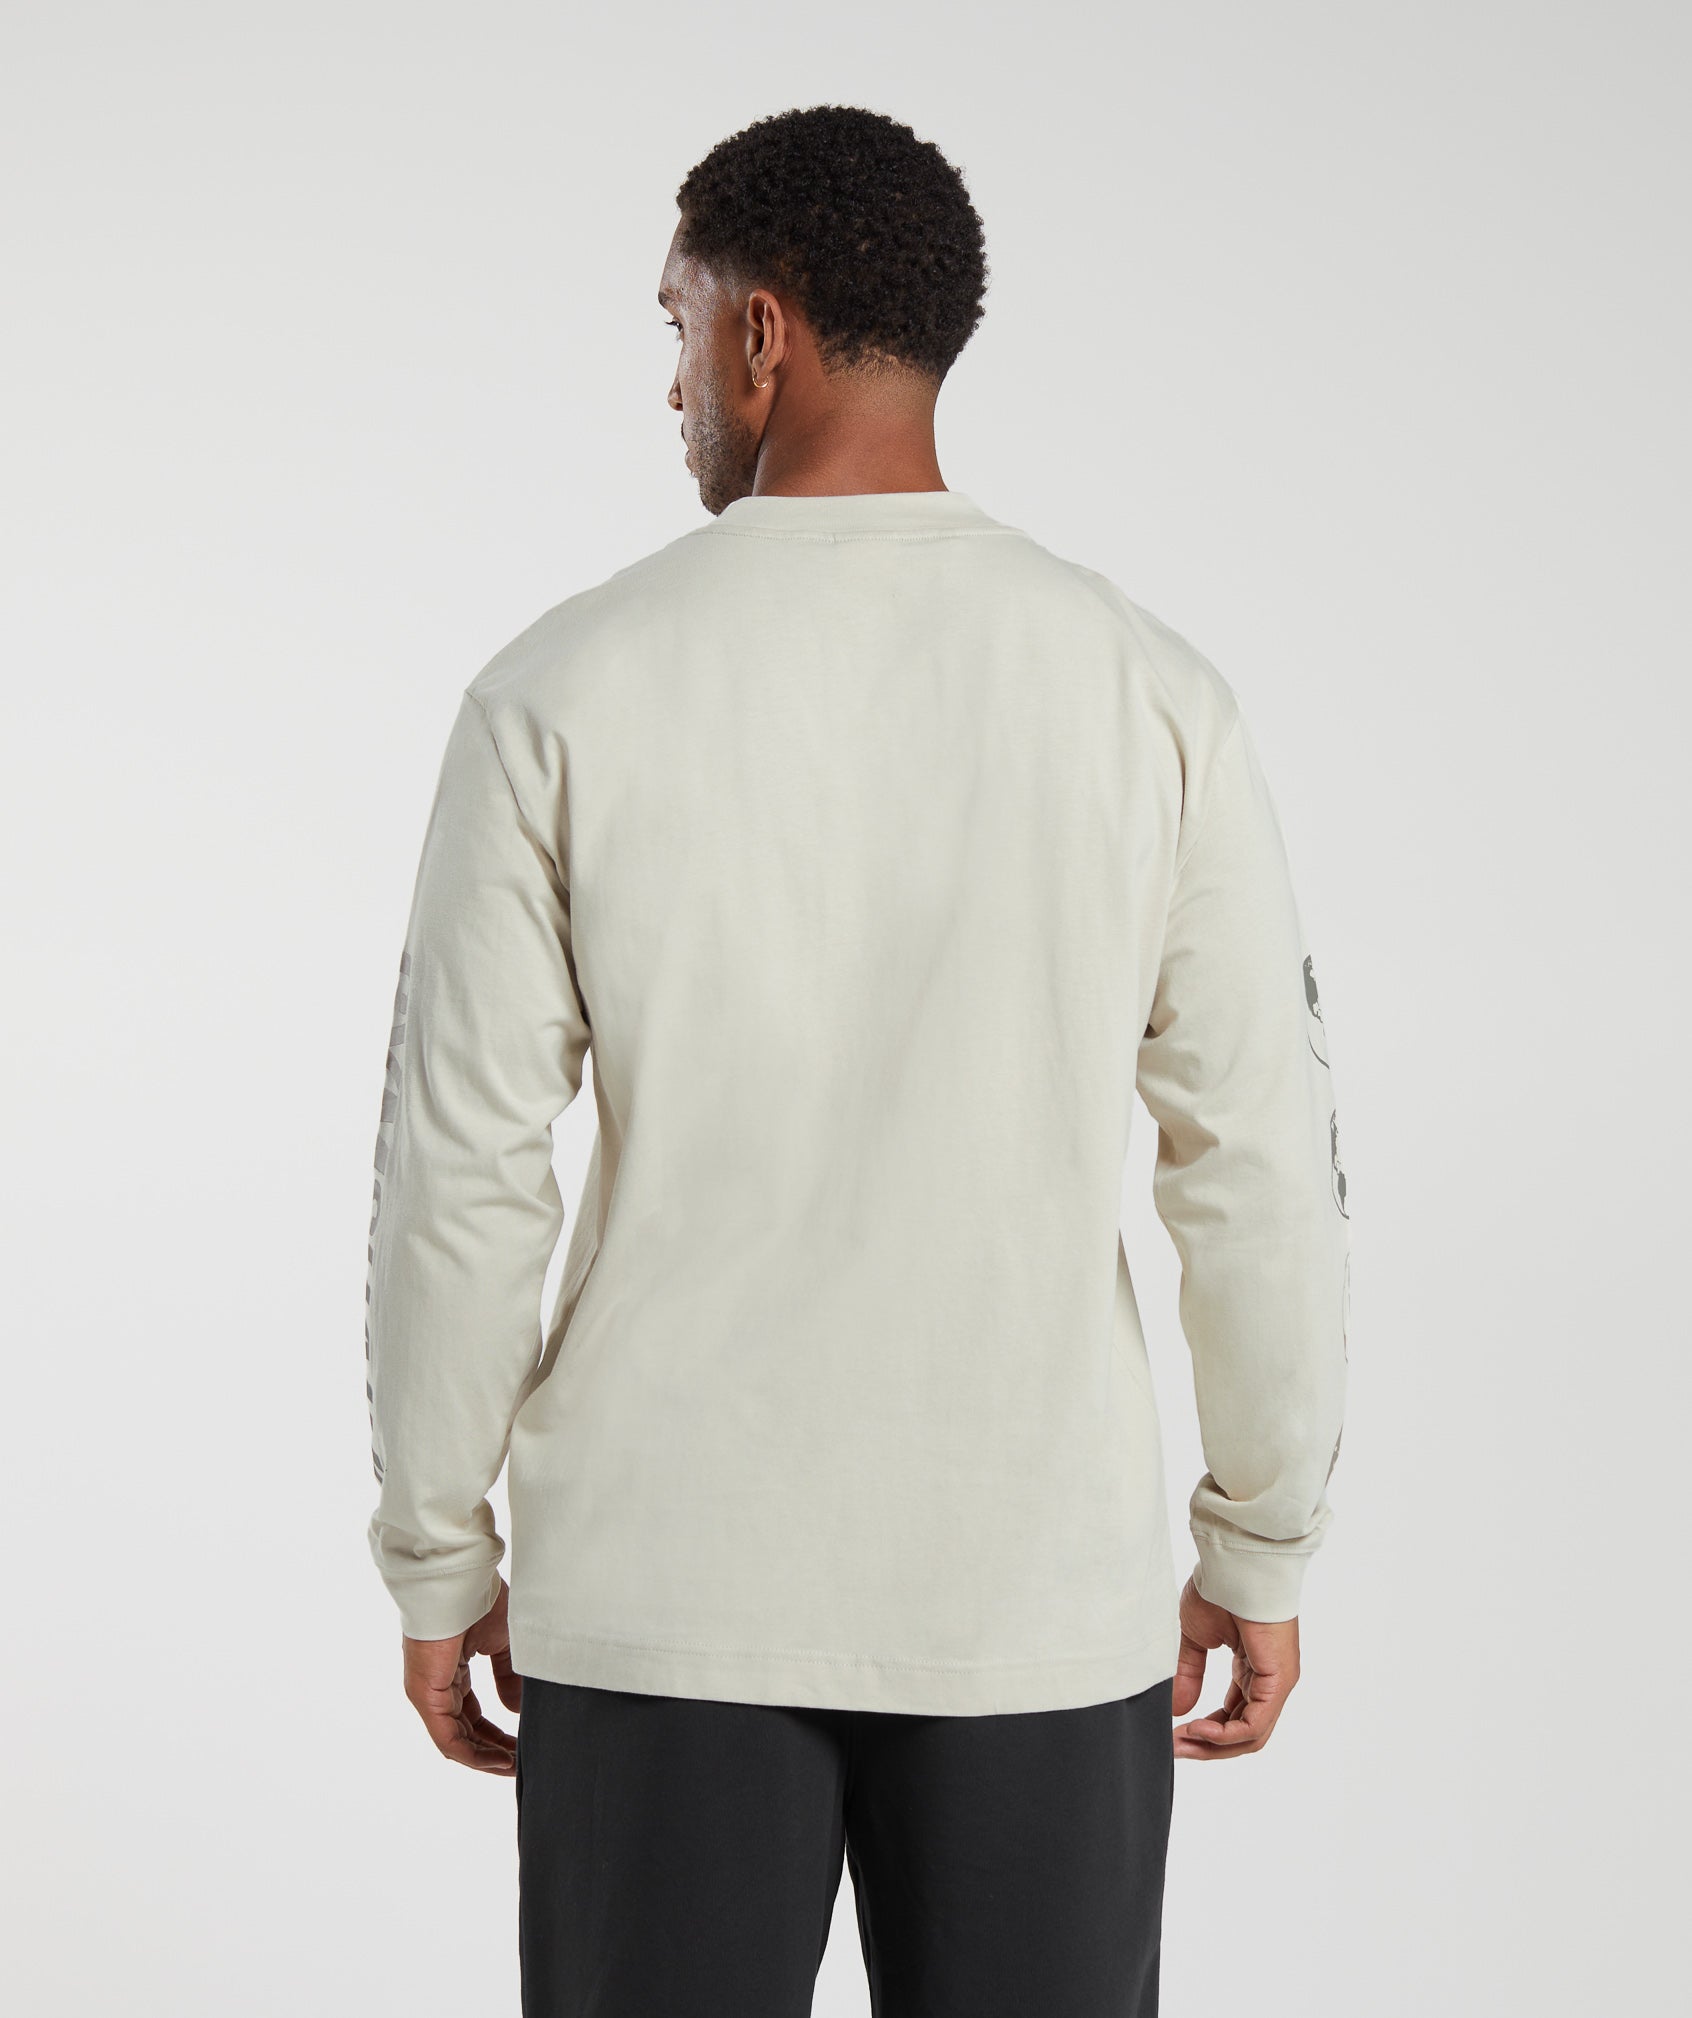 Gymshark Cotton Oversized Long Sleeve Top - Stone Grey